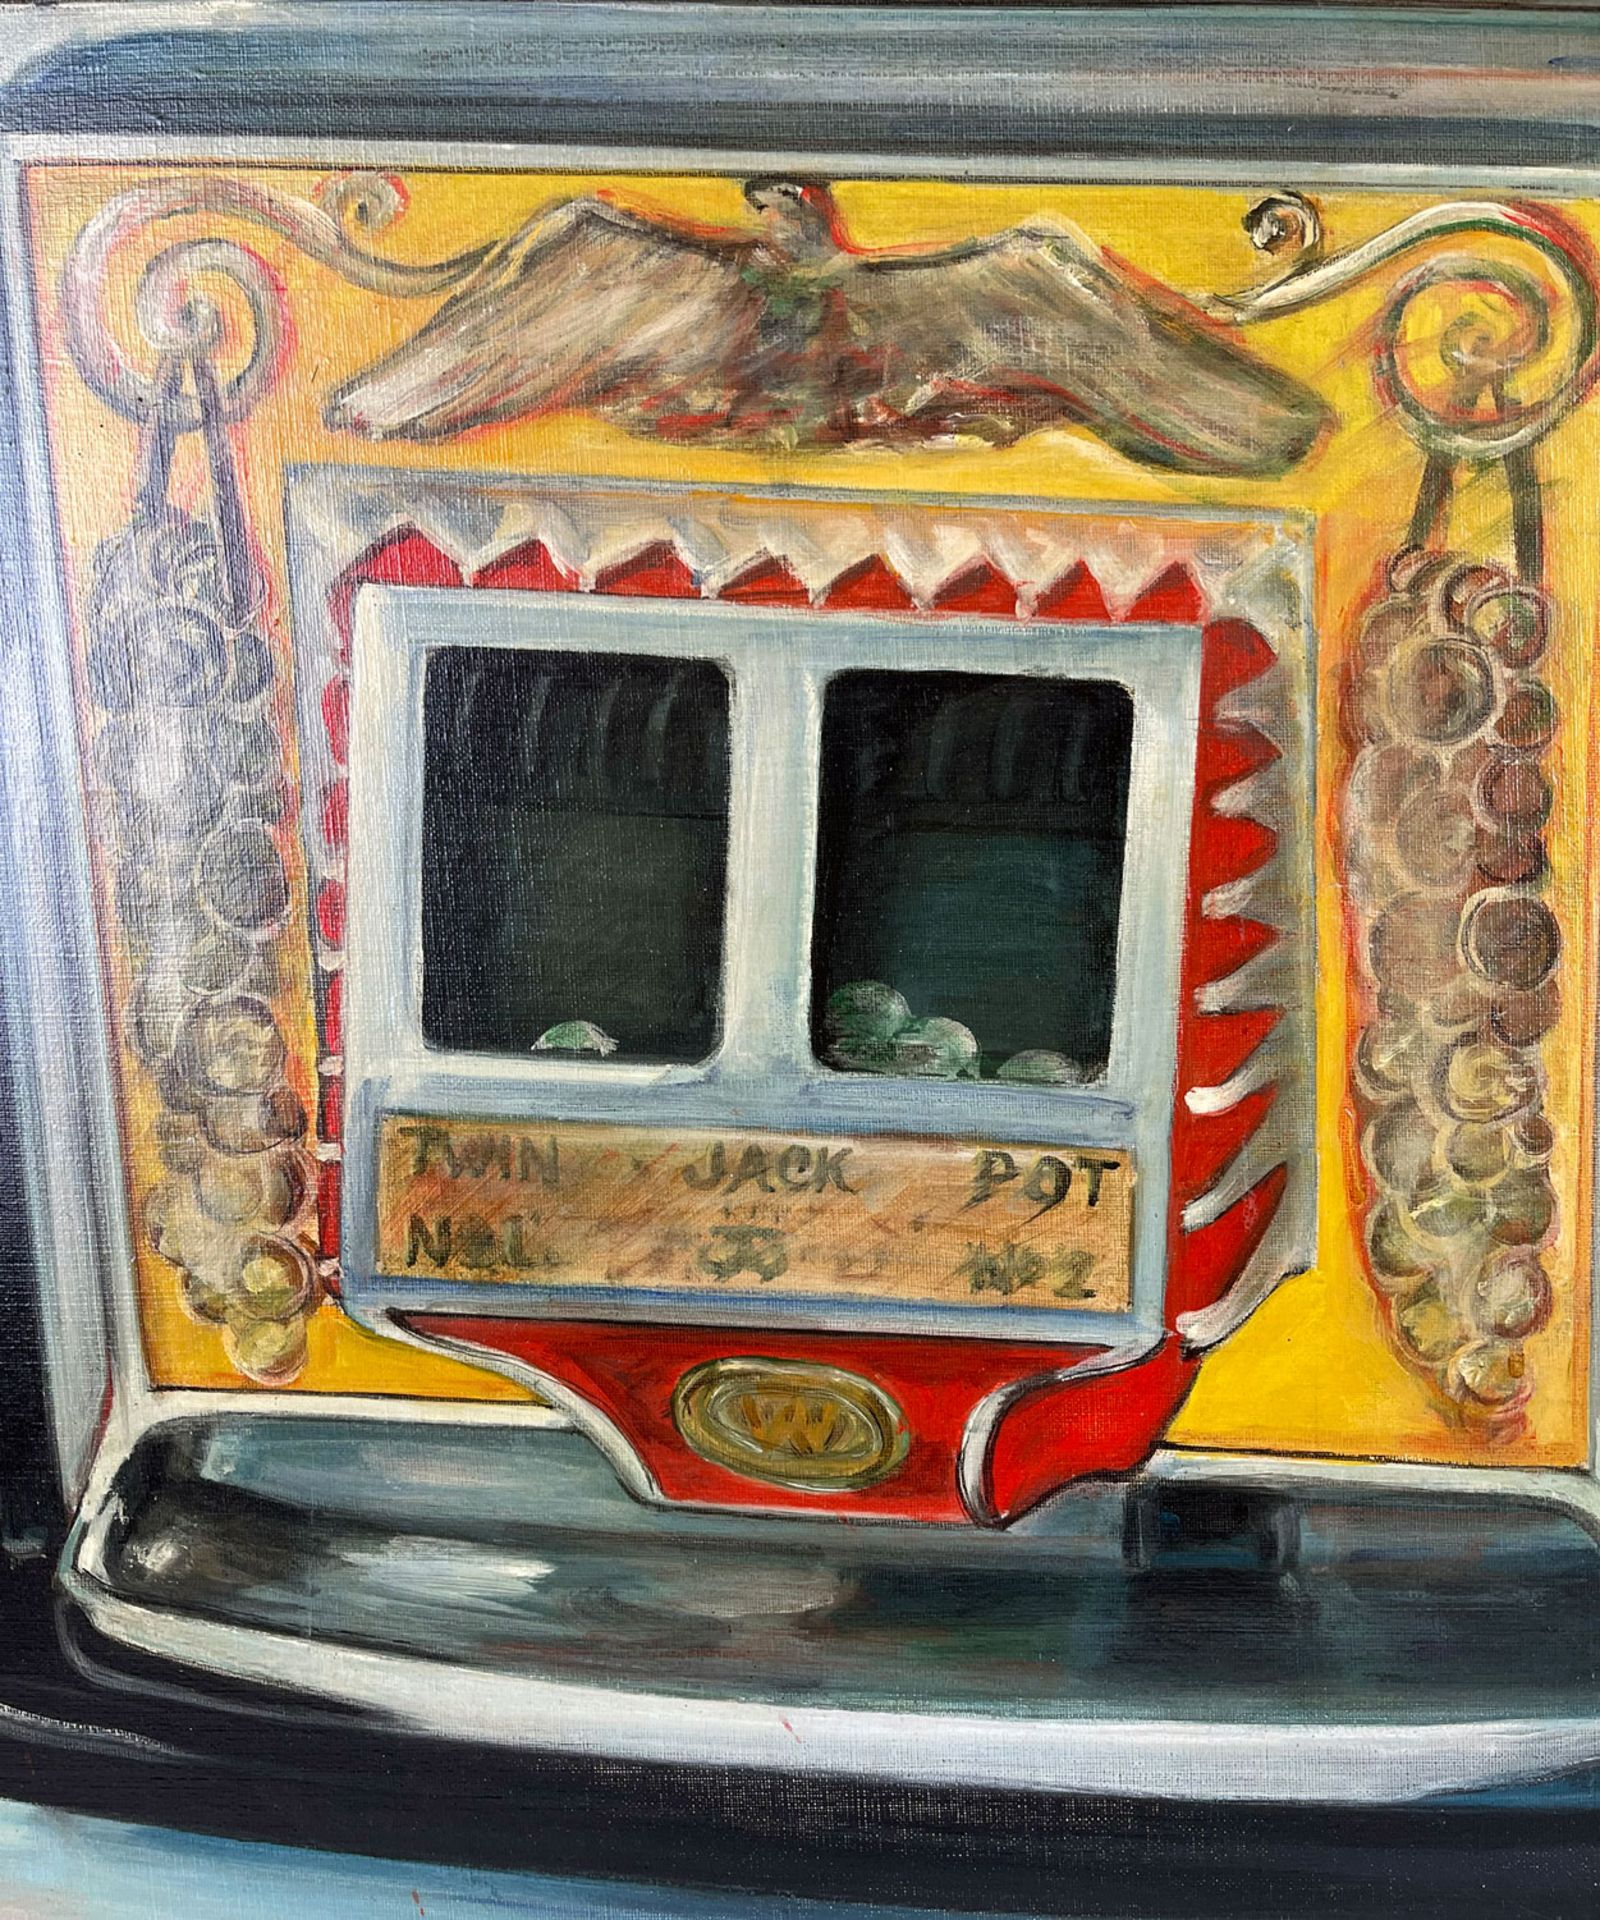 Framed J. Krivine Painting of Watling Treasury Slot Machine - Image 3 of 5